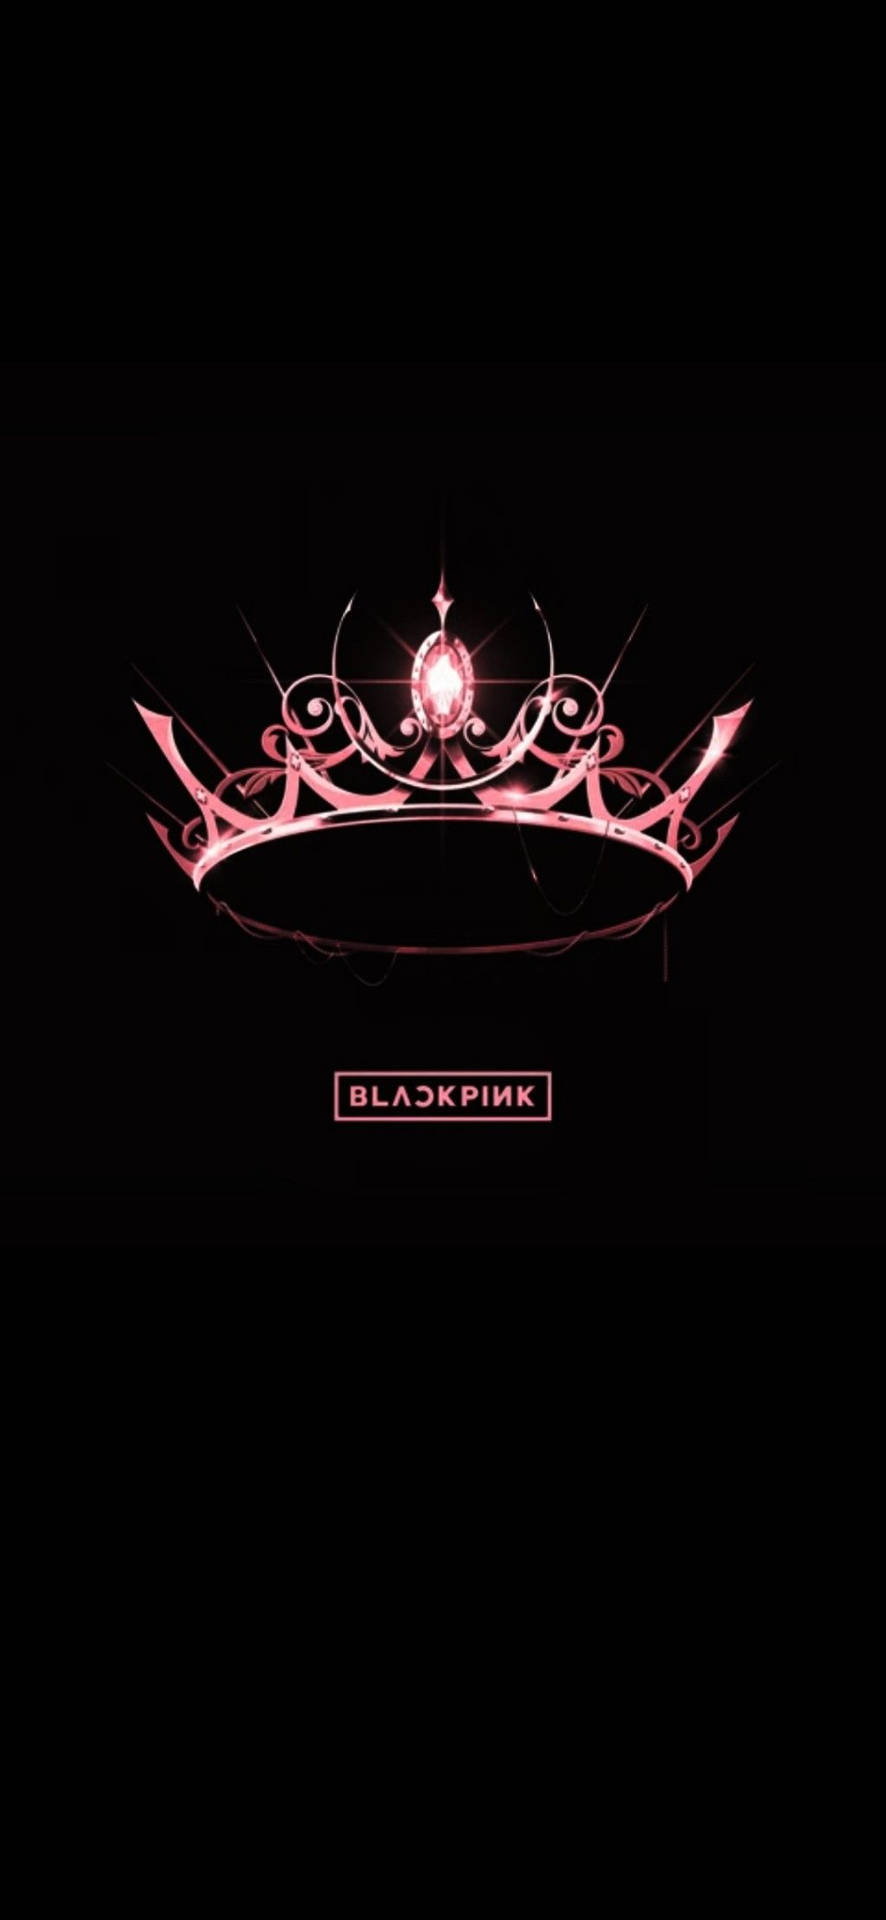 Blackpink Logo For The Album 2020 Background